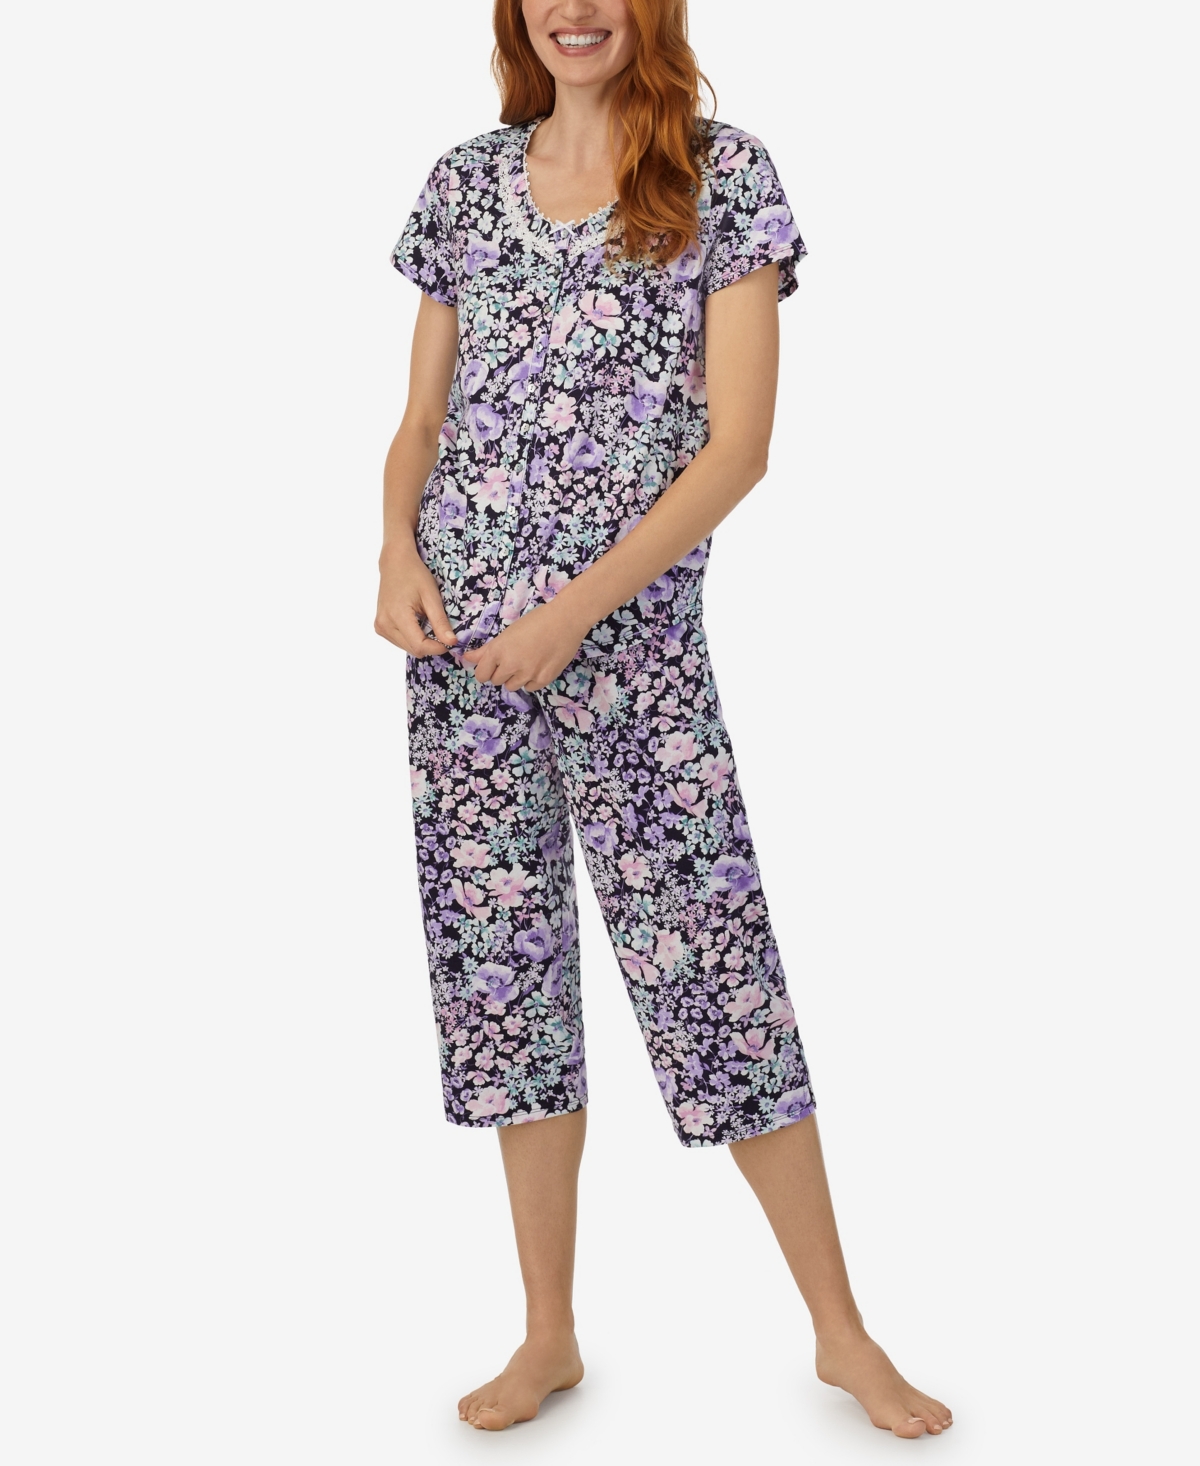 Women's Short Sleeve Top Capri Pants 2-Pc. Pajama Set - Navy Floral Print